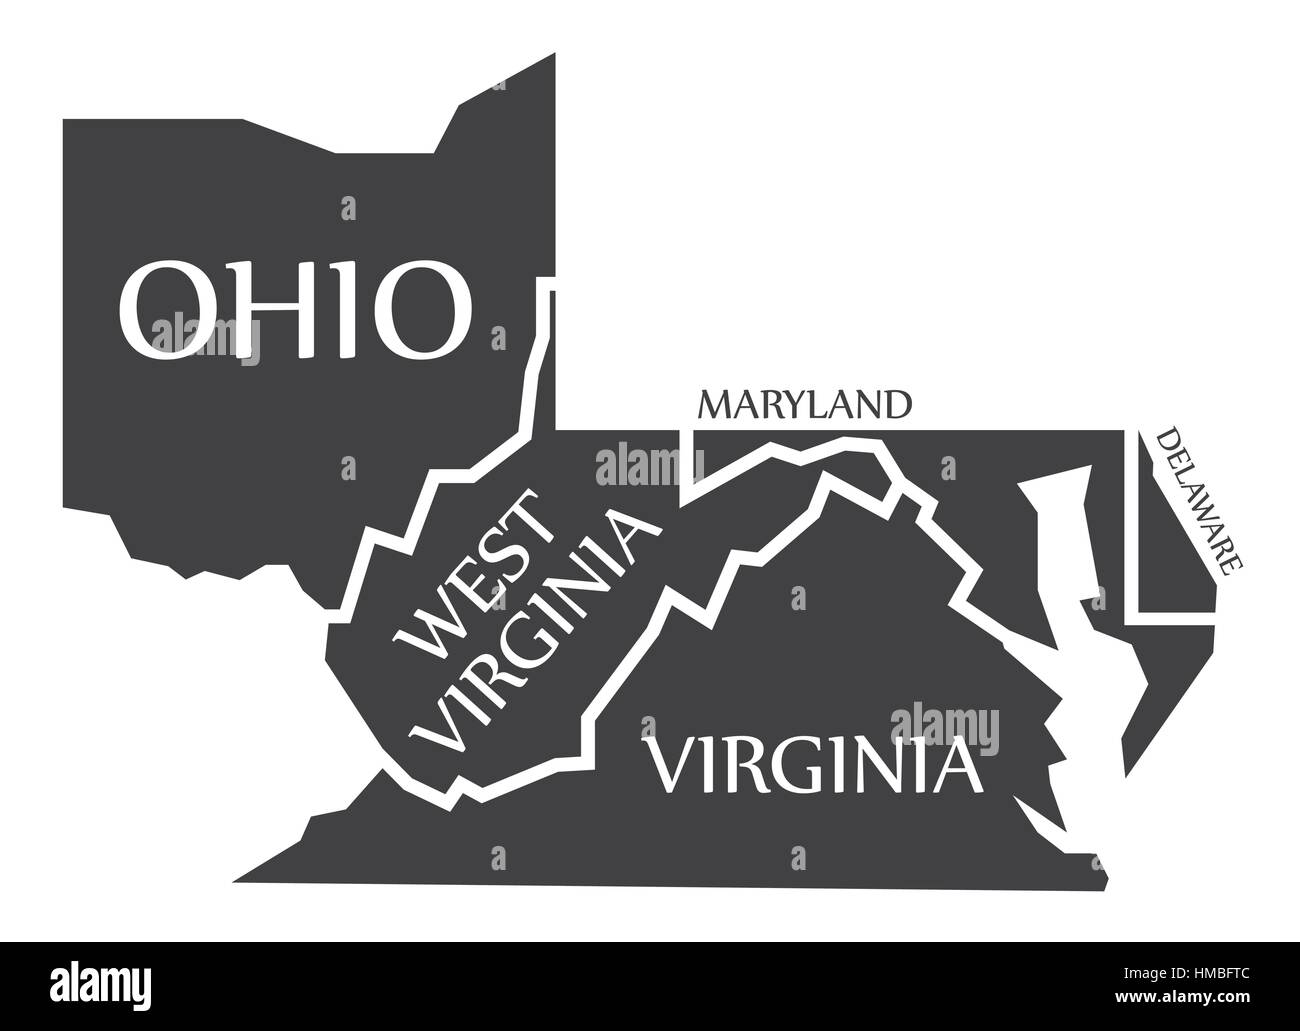 Ohio - West Virginia - Virginia - Maryland - Delaware Map labelled black illustration Stock Vector